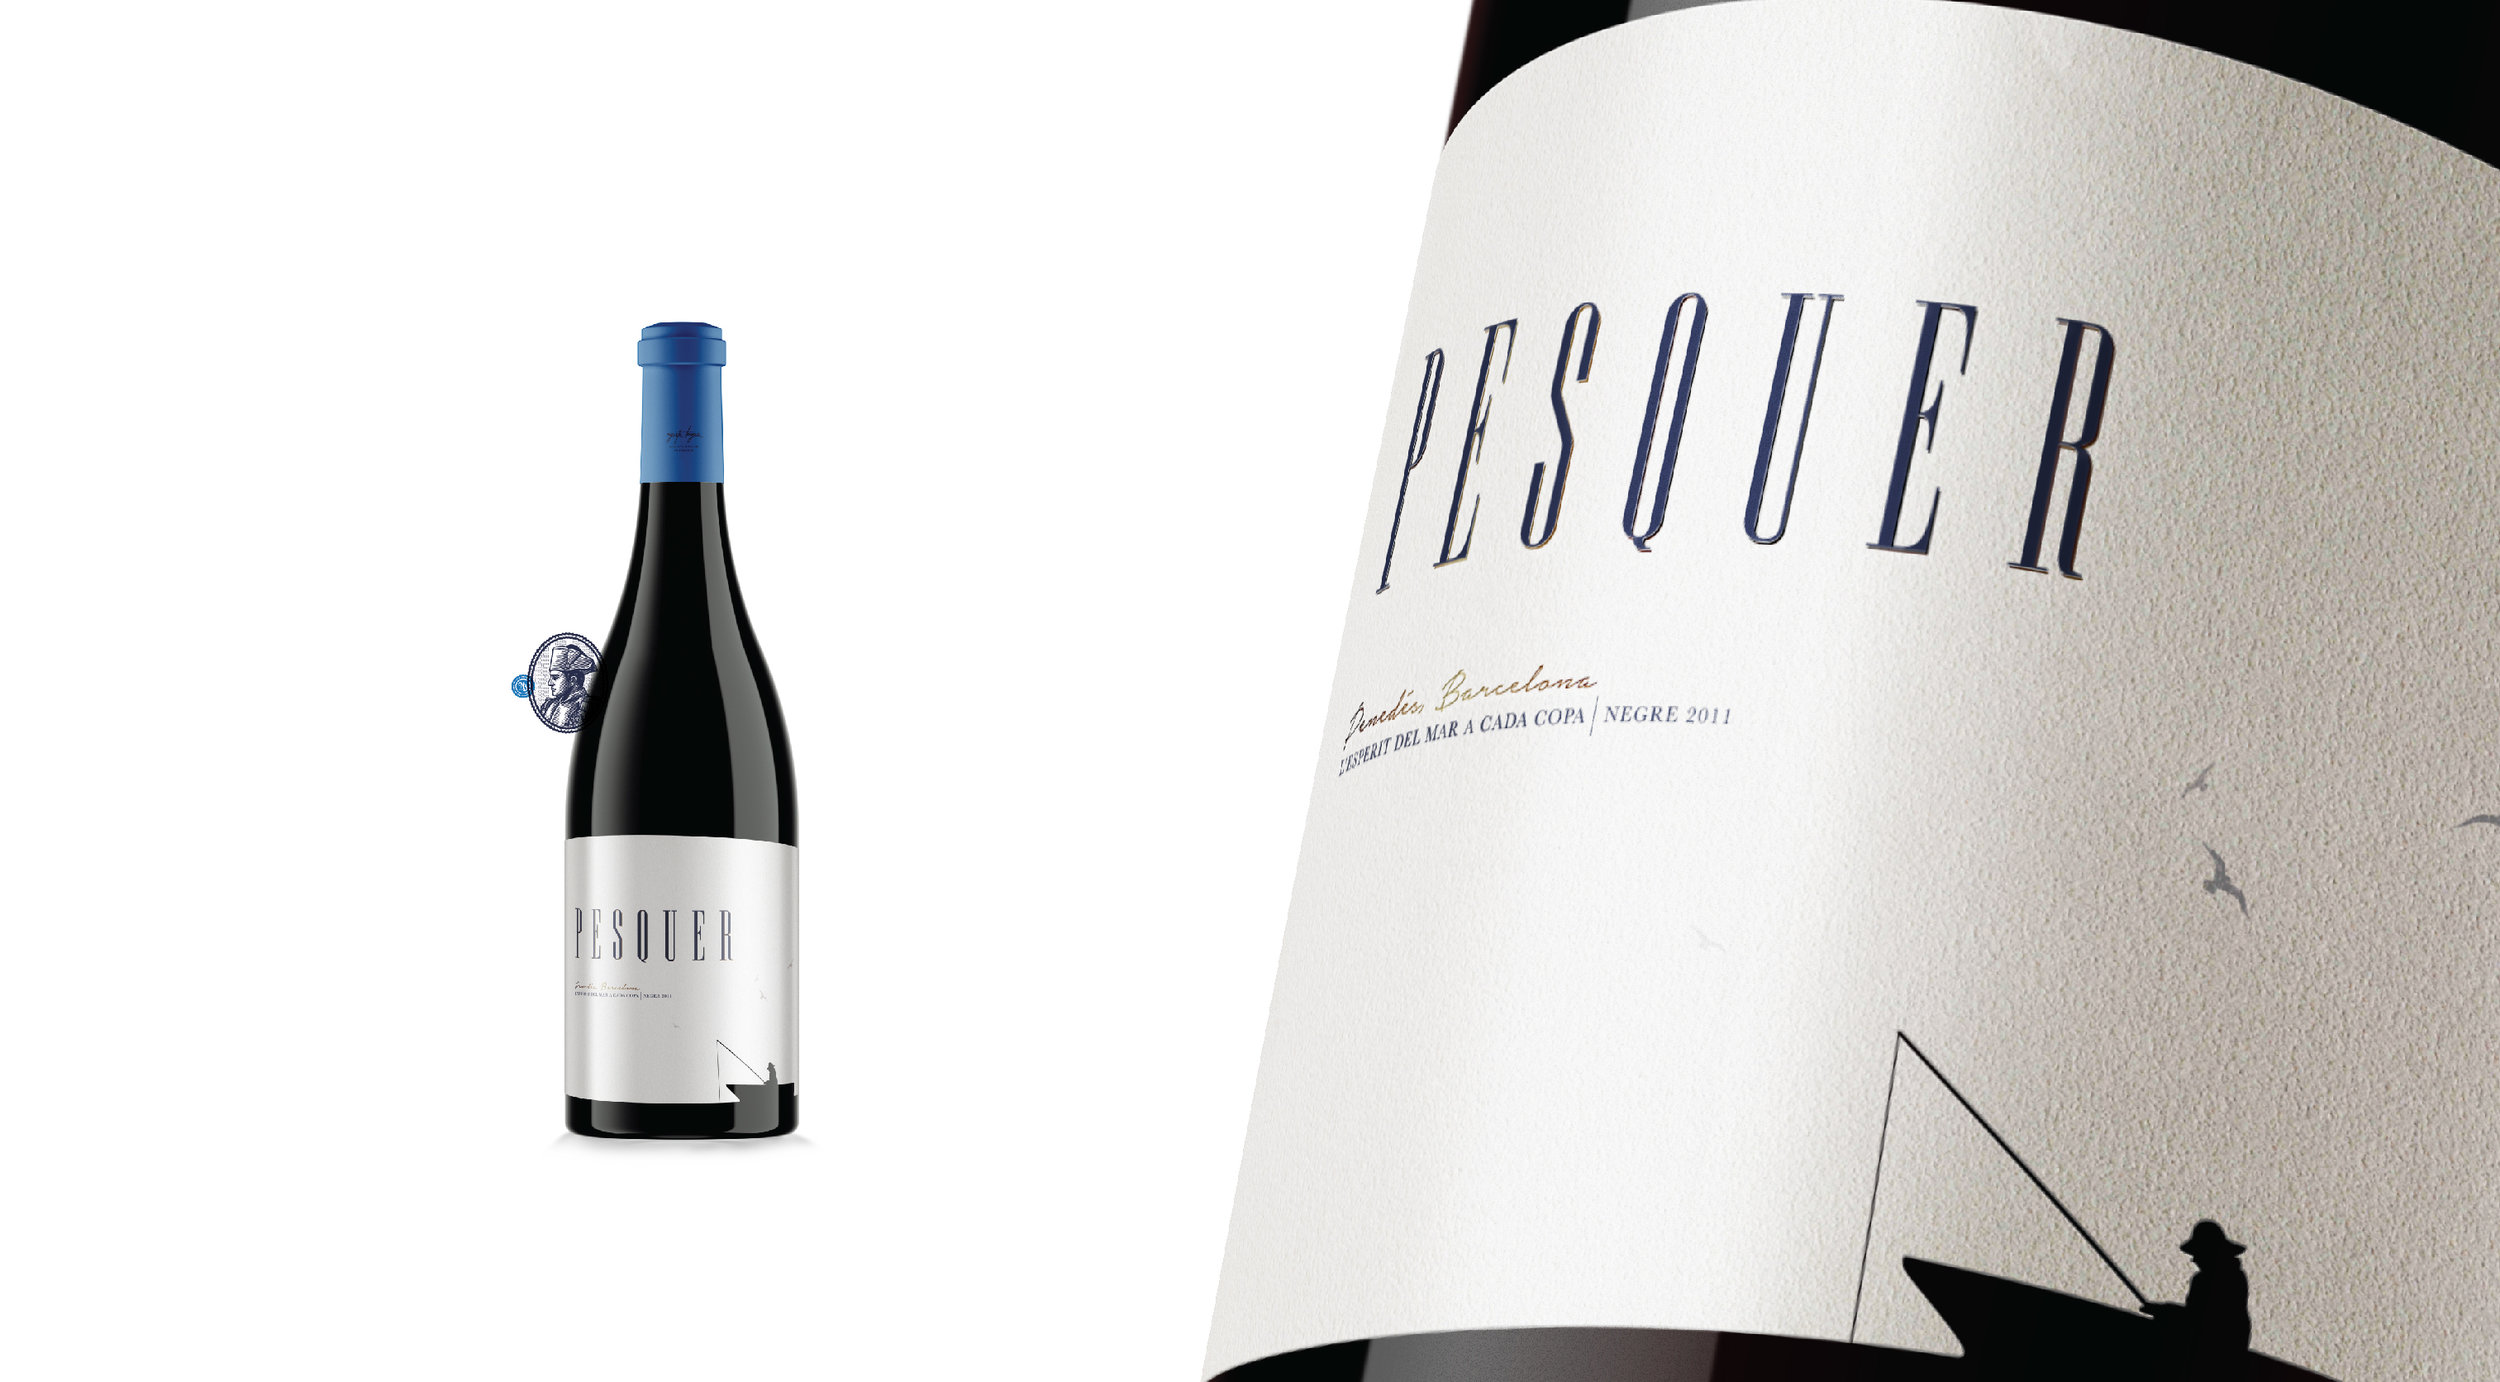 El idealista – Pesquer Wine label (Self Published)